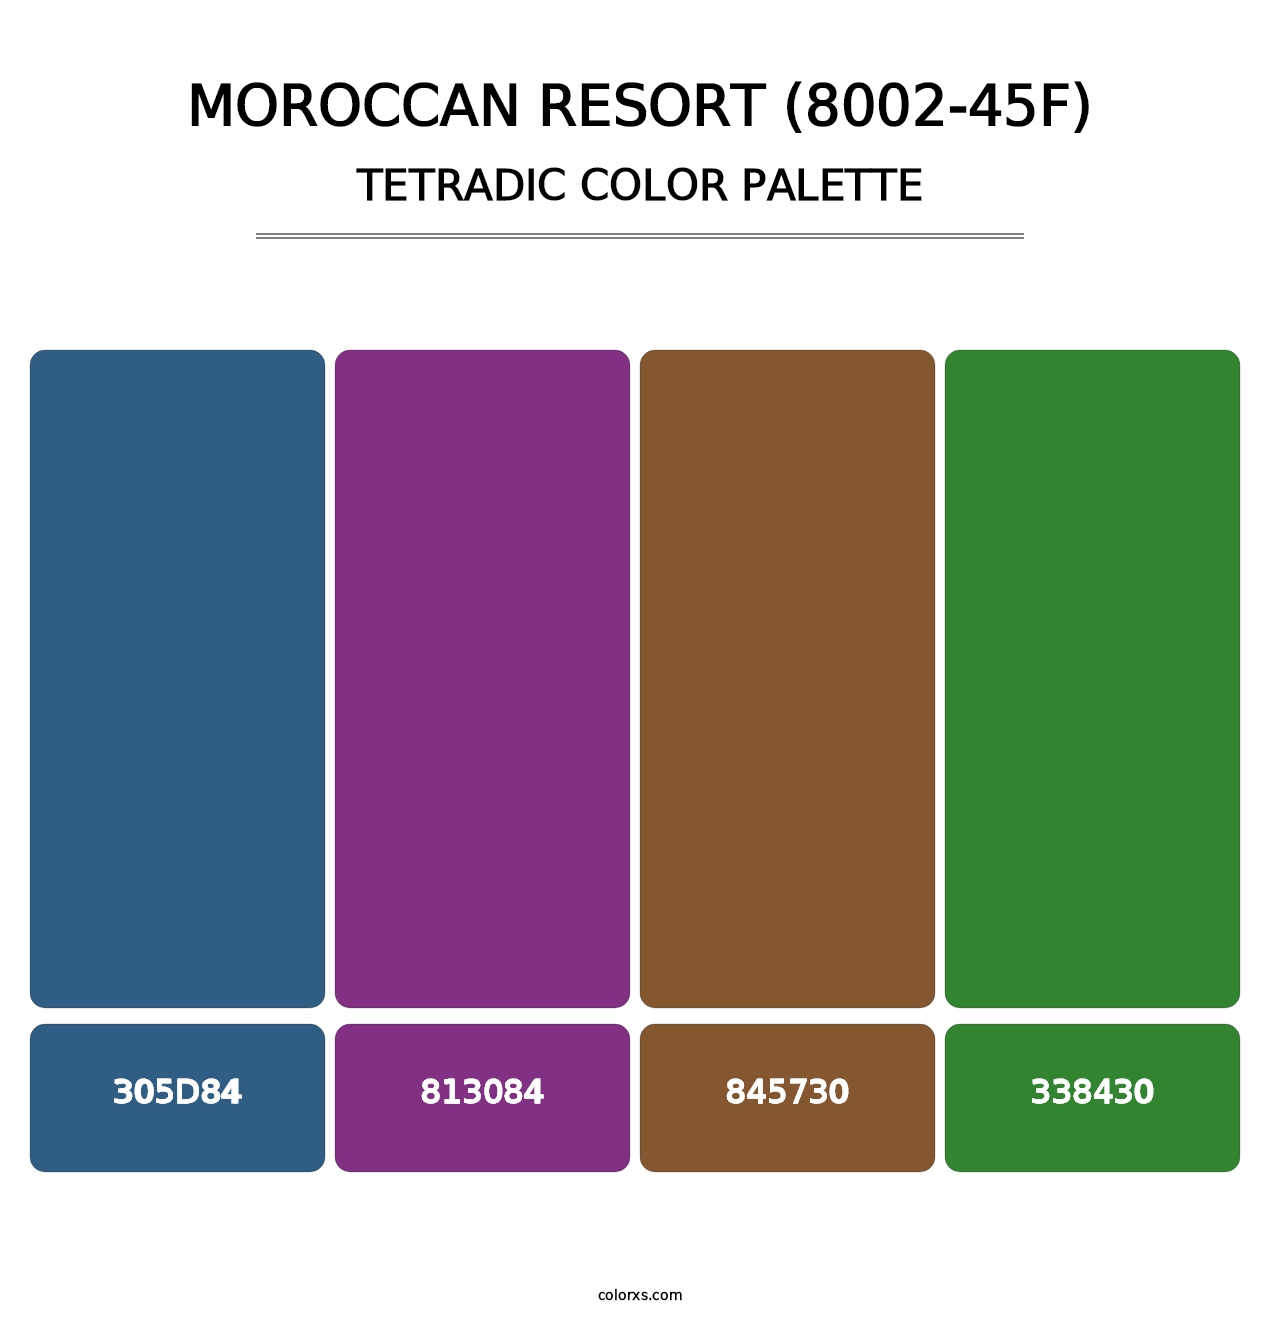 Moroccan Resort (8002-45F) - Tetradic Color Palette